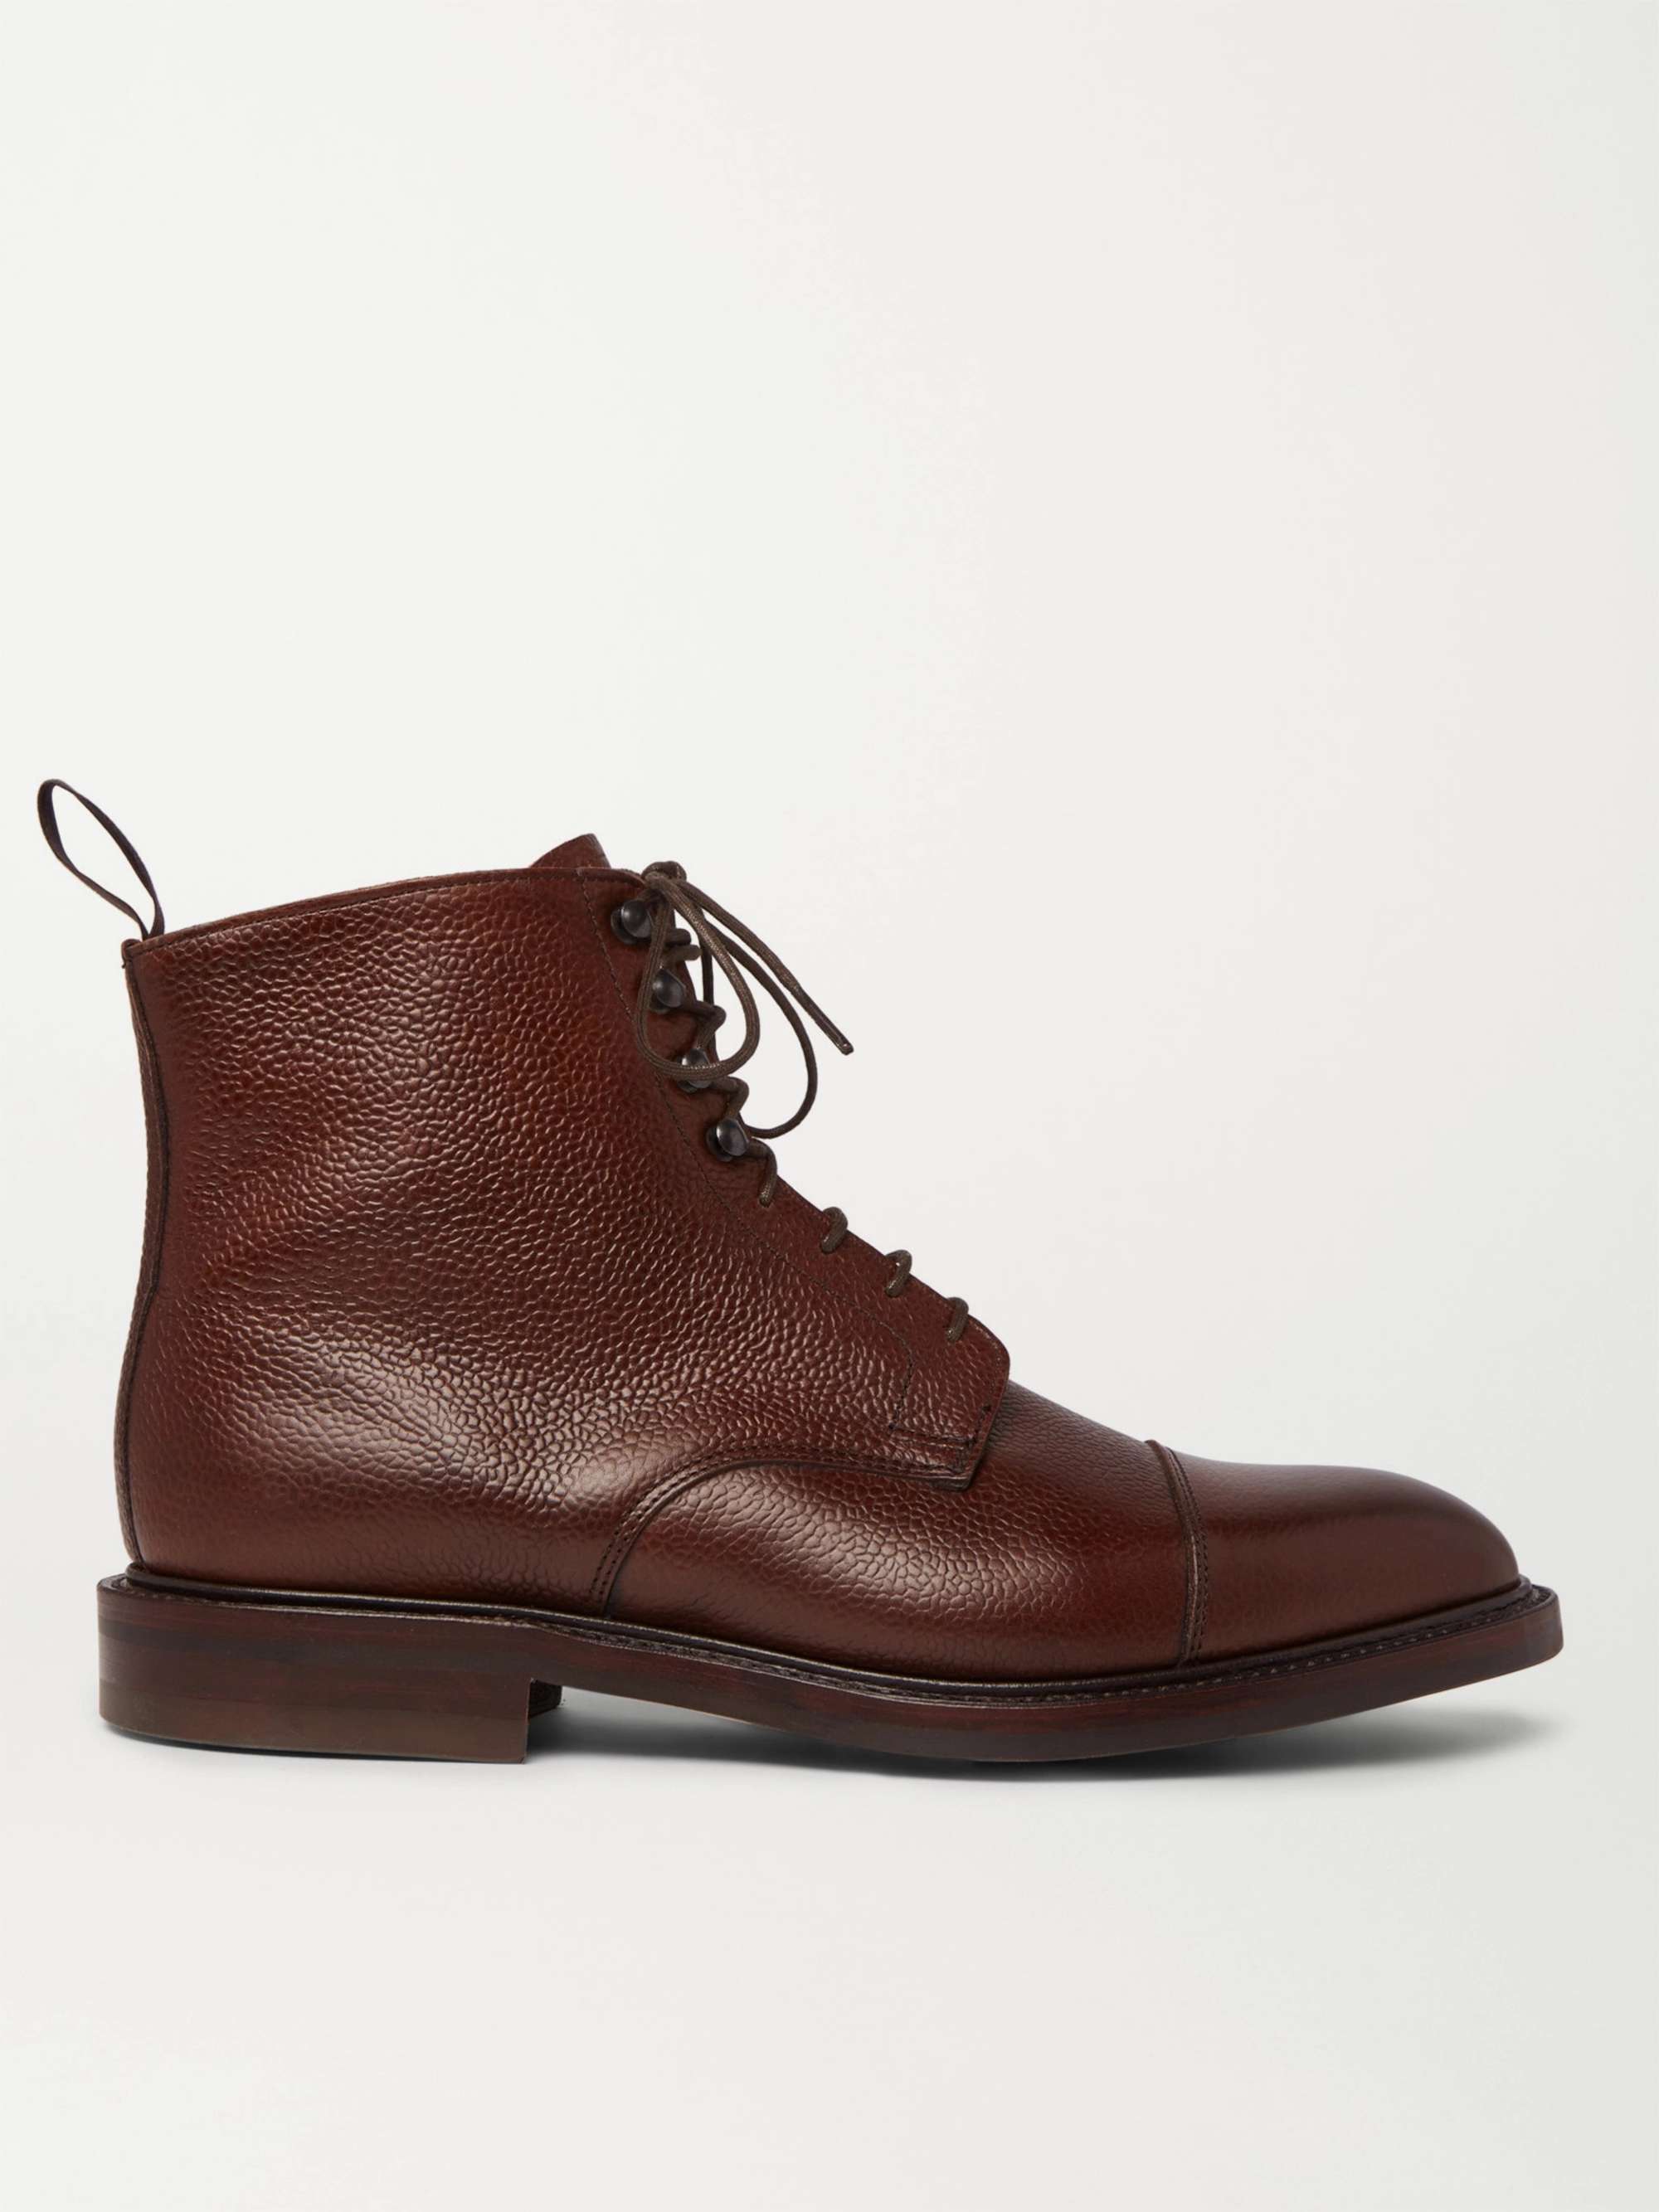 KINGSMAN + George Cleverley Cap-Toe Pebble-Grain Leather Boots | MR PORTER